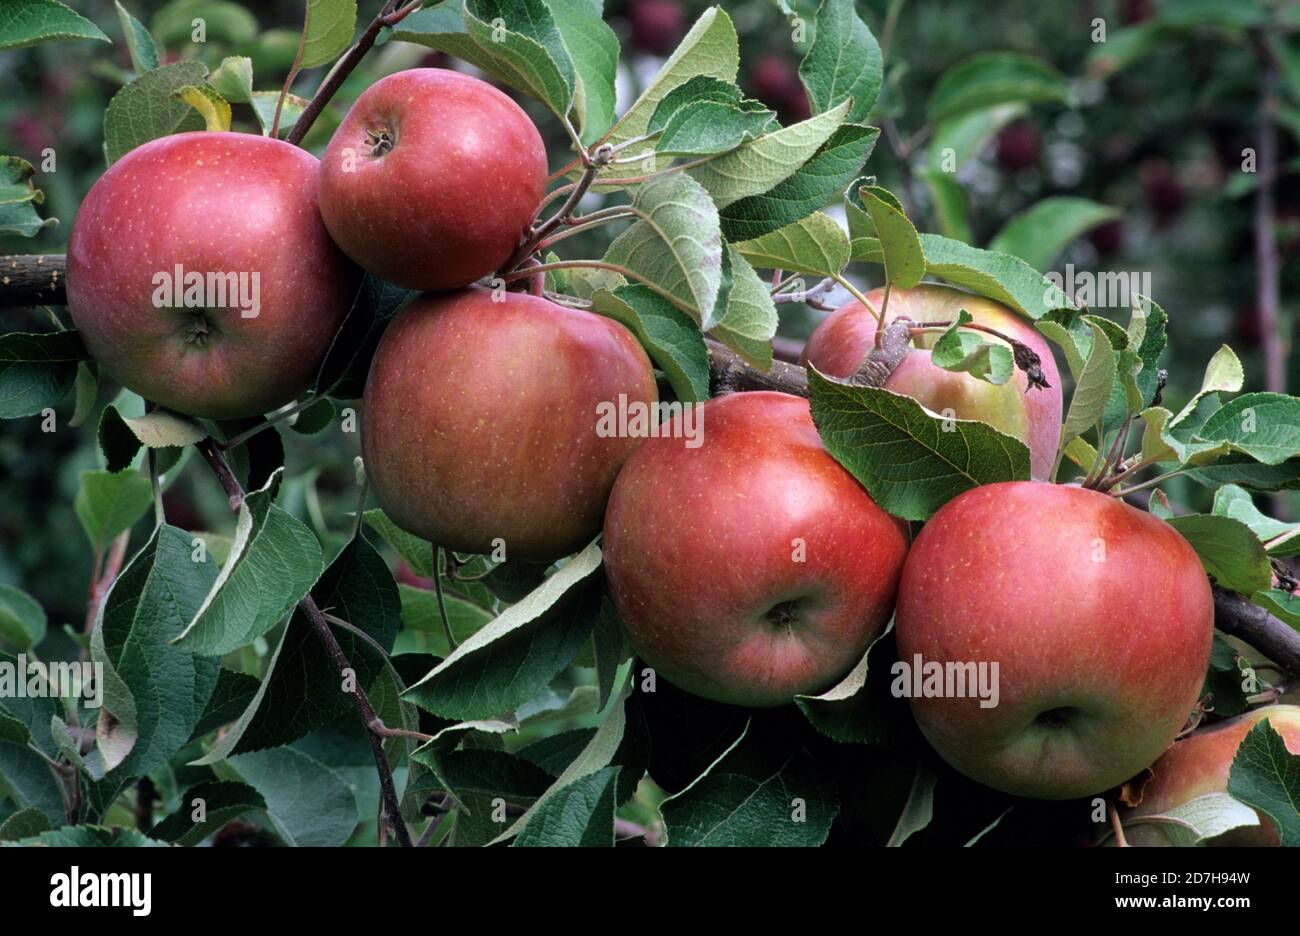 https://c8.alamy.com/comp/2D7H94W/apples-fuji-malus-pumila-fruits-on-the-tree-2D7H94W.jpg